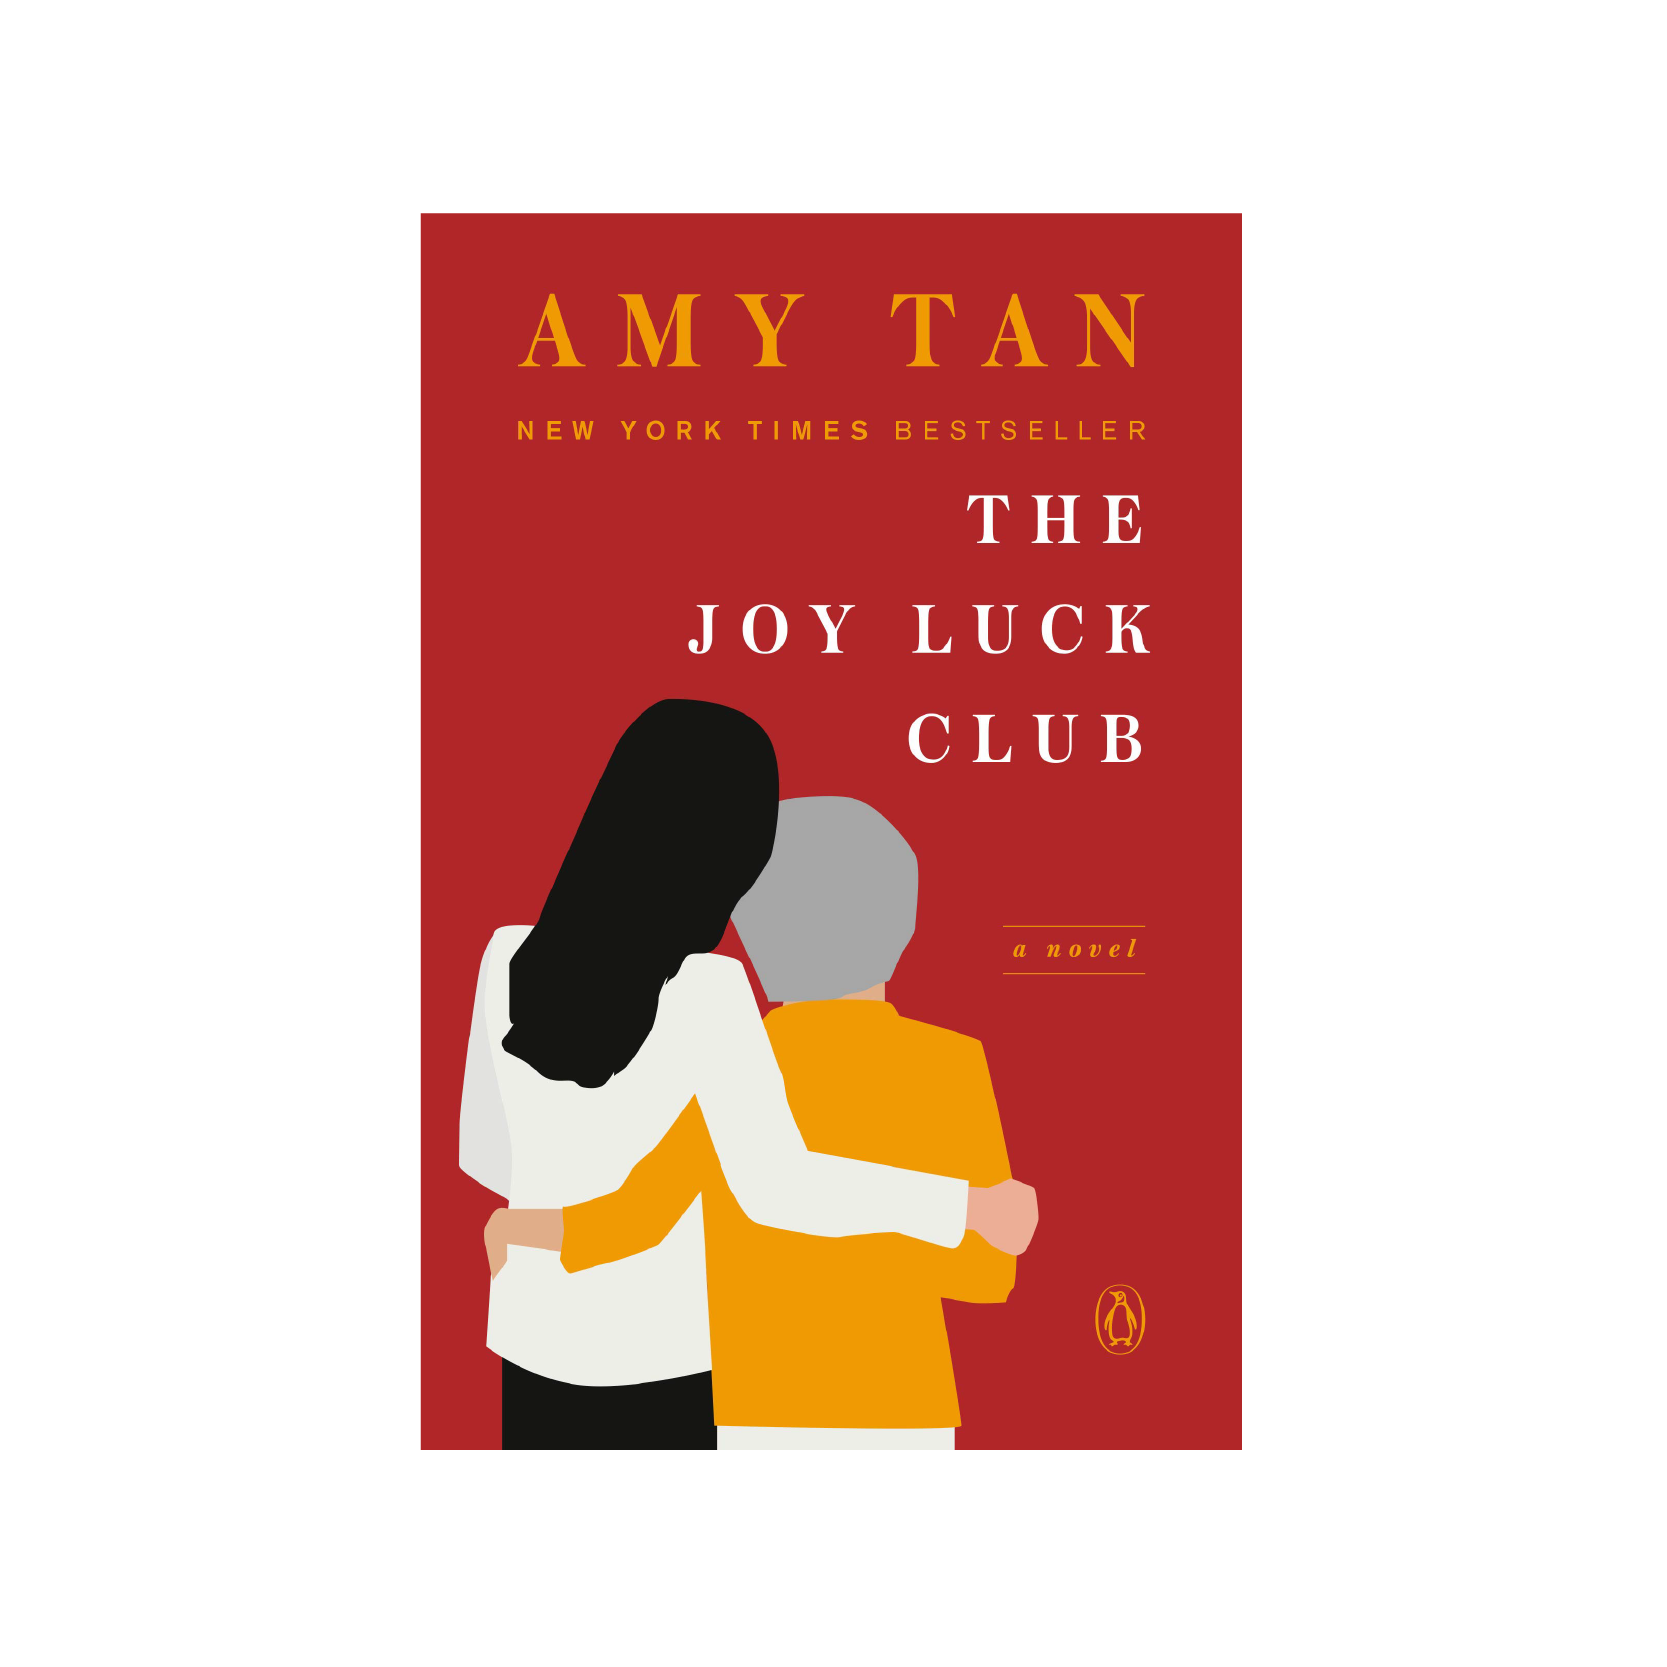 “The Joy Luck Club” by Amy Tan